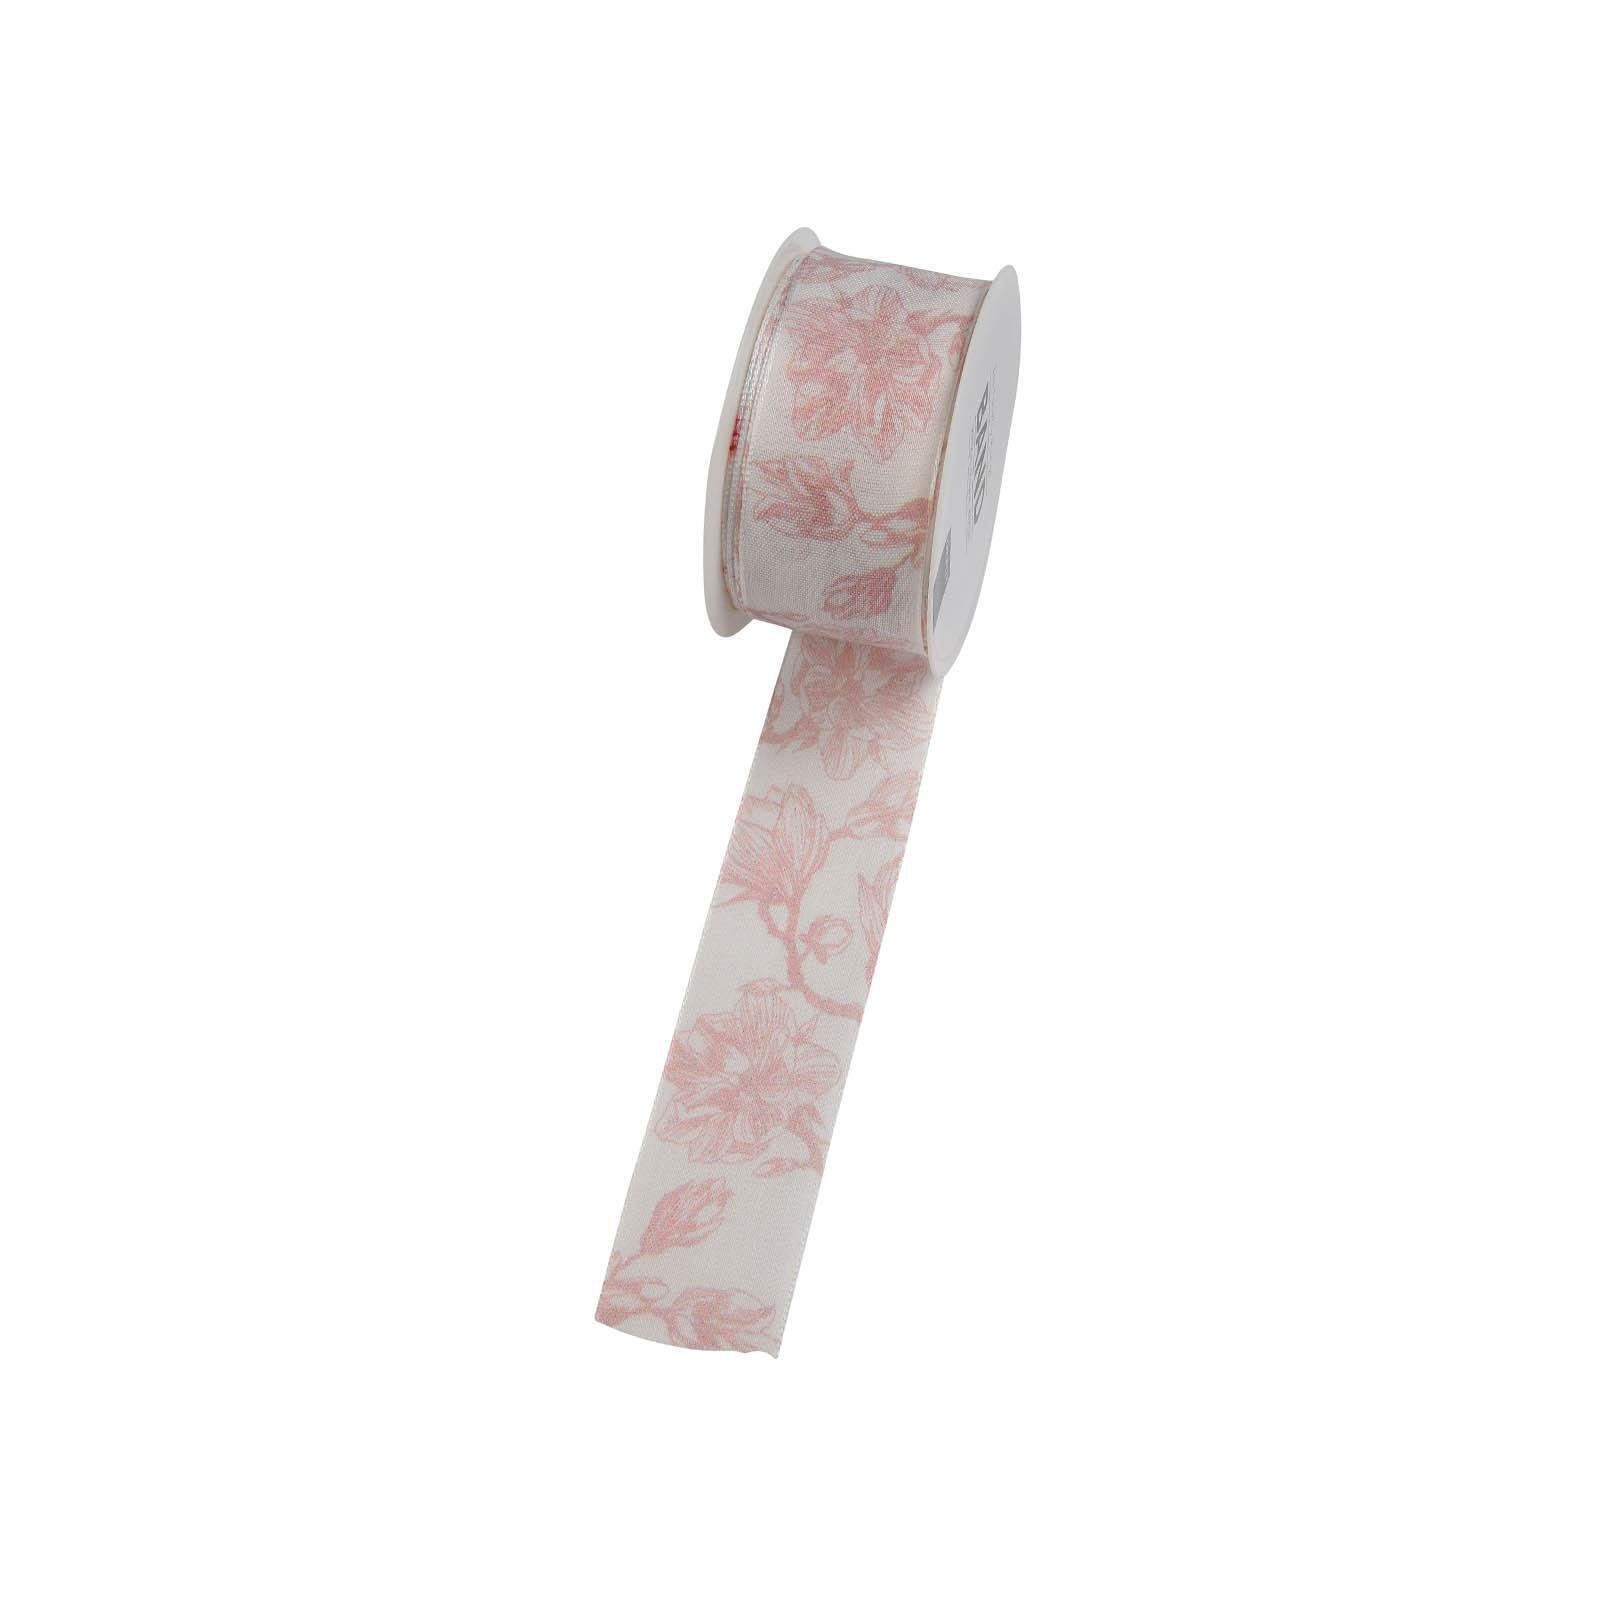 Zentimeter B aus Band Depot Meter, Polyester, Rosa L 3 Magnolie, 4 Geschenkpapier